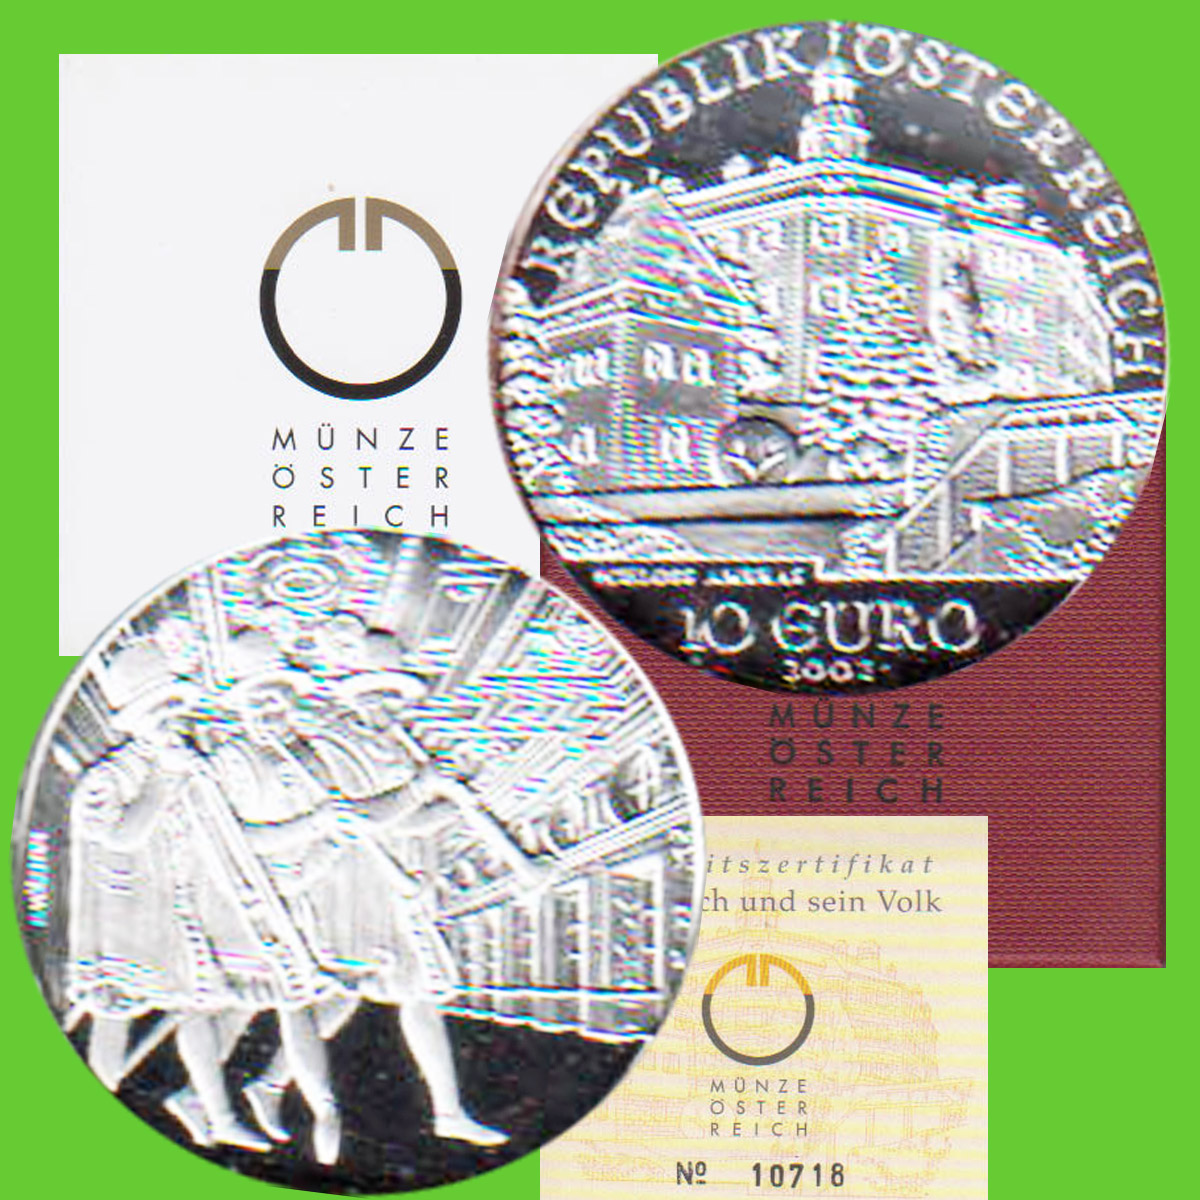  Offiz. 10 Euro Silbermünze Österreich *Schloss Ambras* 2002 *PP* max 50.000St! 1. Ausgabe!!   